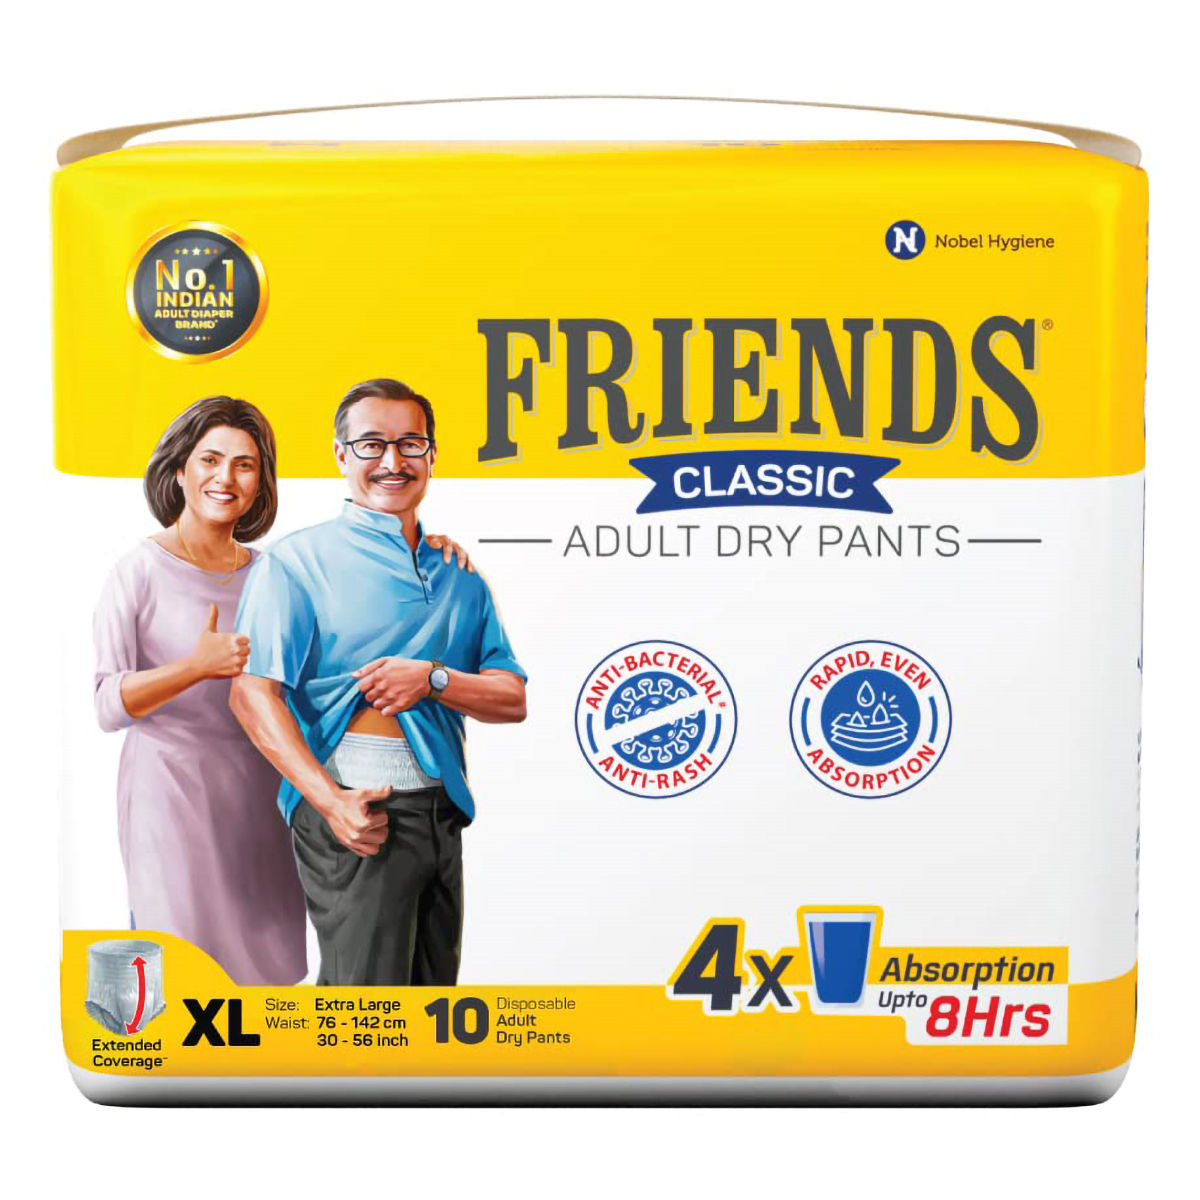 Buy Friends Classic Adult Dry Pants XL, 10 Count Online